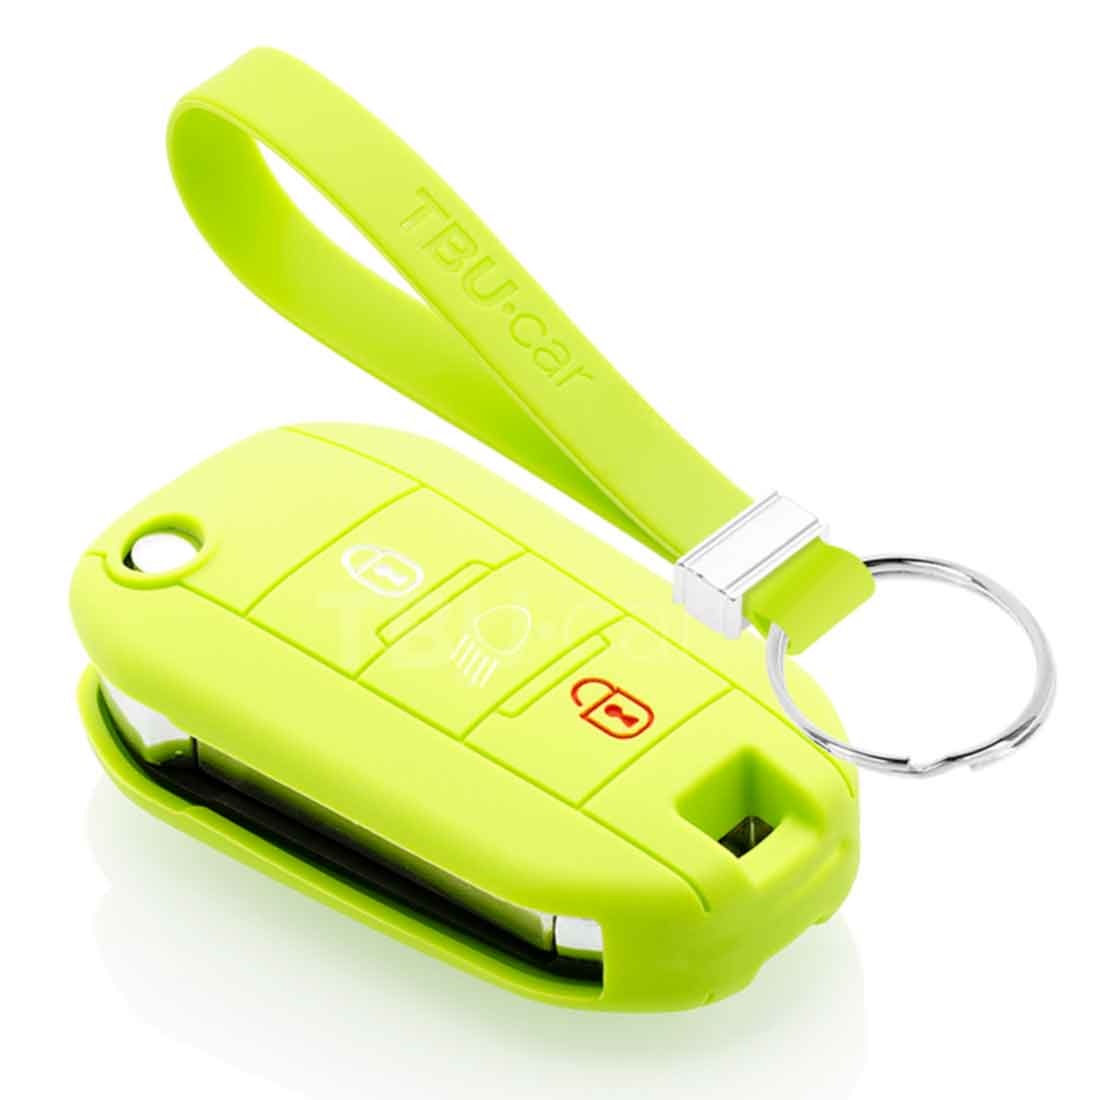 TBU car TBU car Autoschlüssel Hülle kompatibel mit Peugeot 3 Tasten (Licht Taste) - Schutzhülle aus Silikon - Auto Schlüsselhülle Cover in Lindgrün